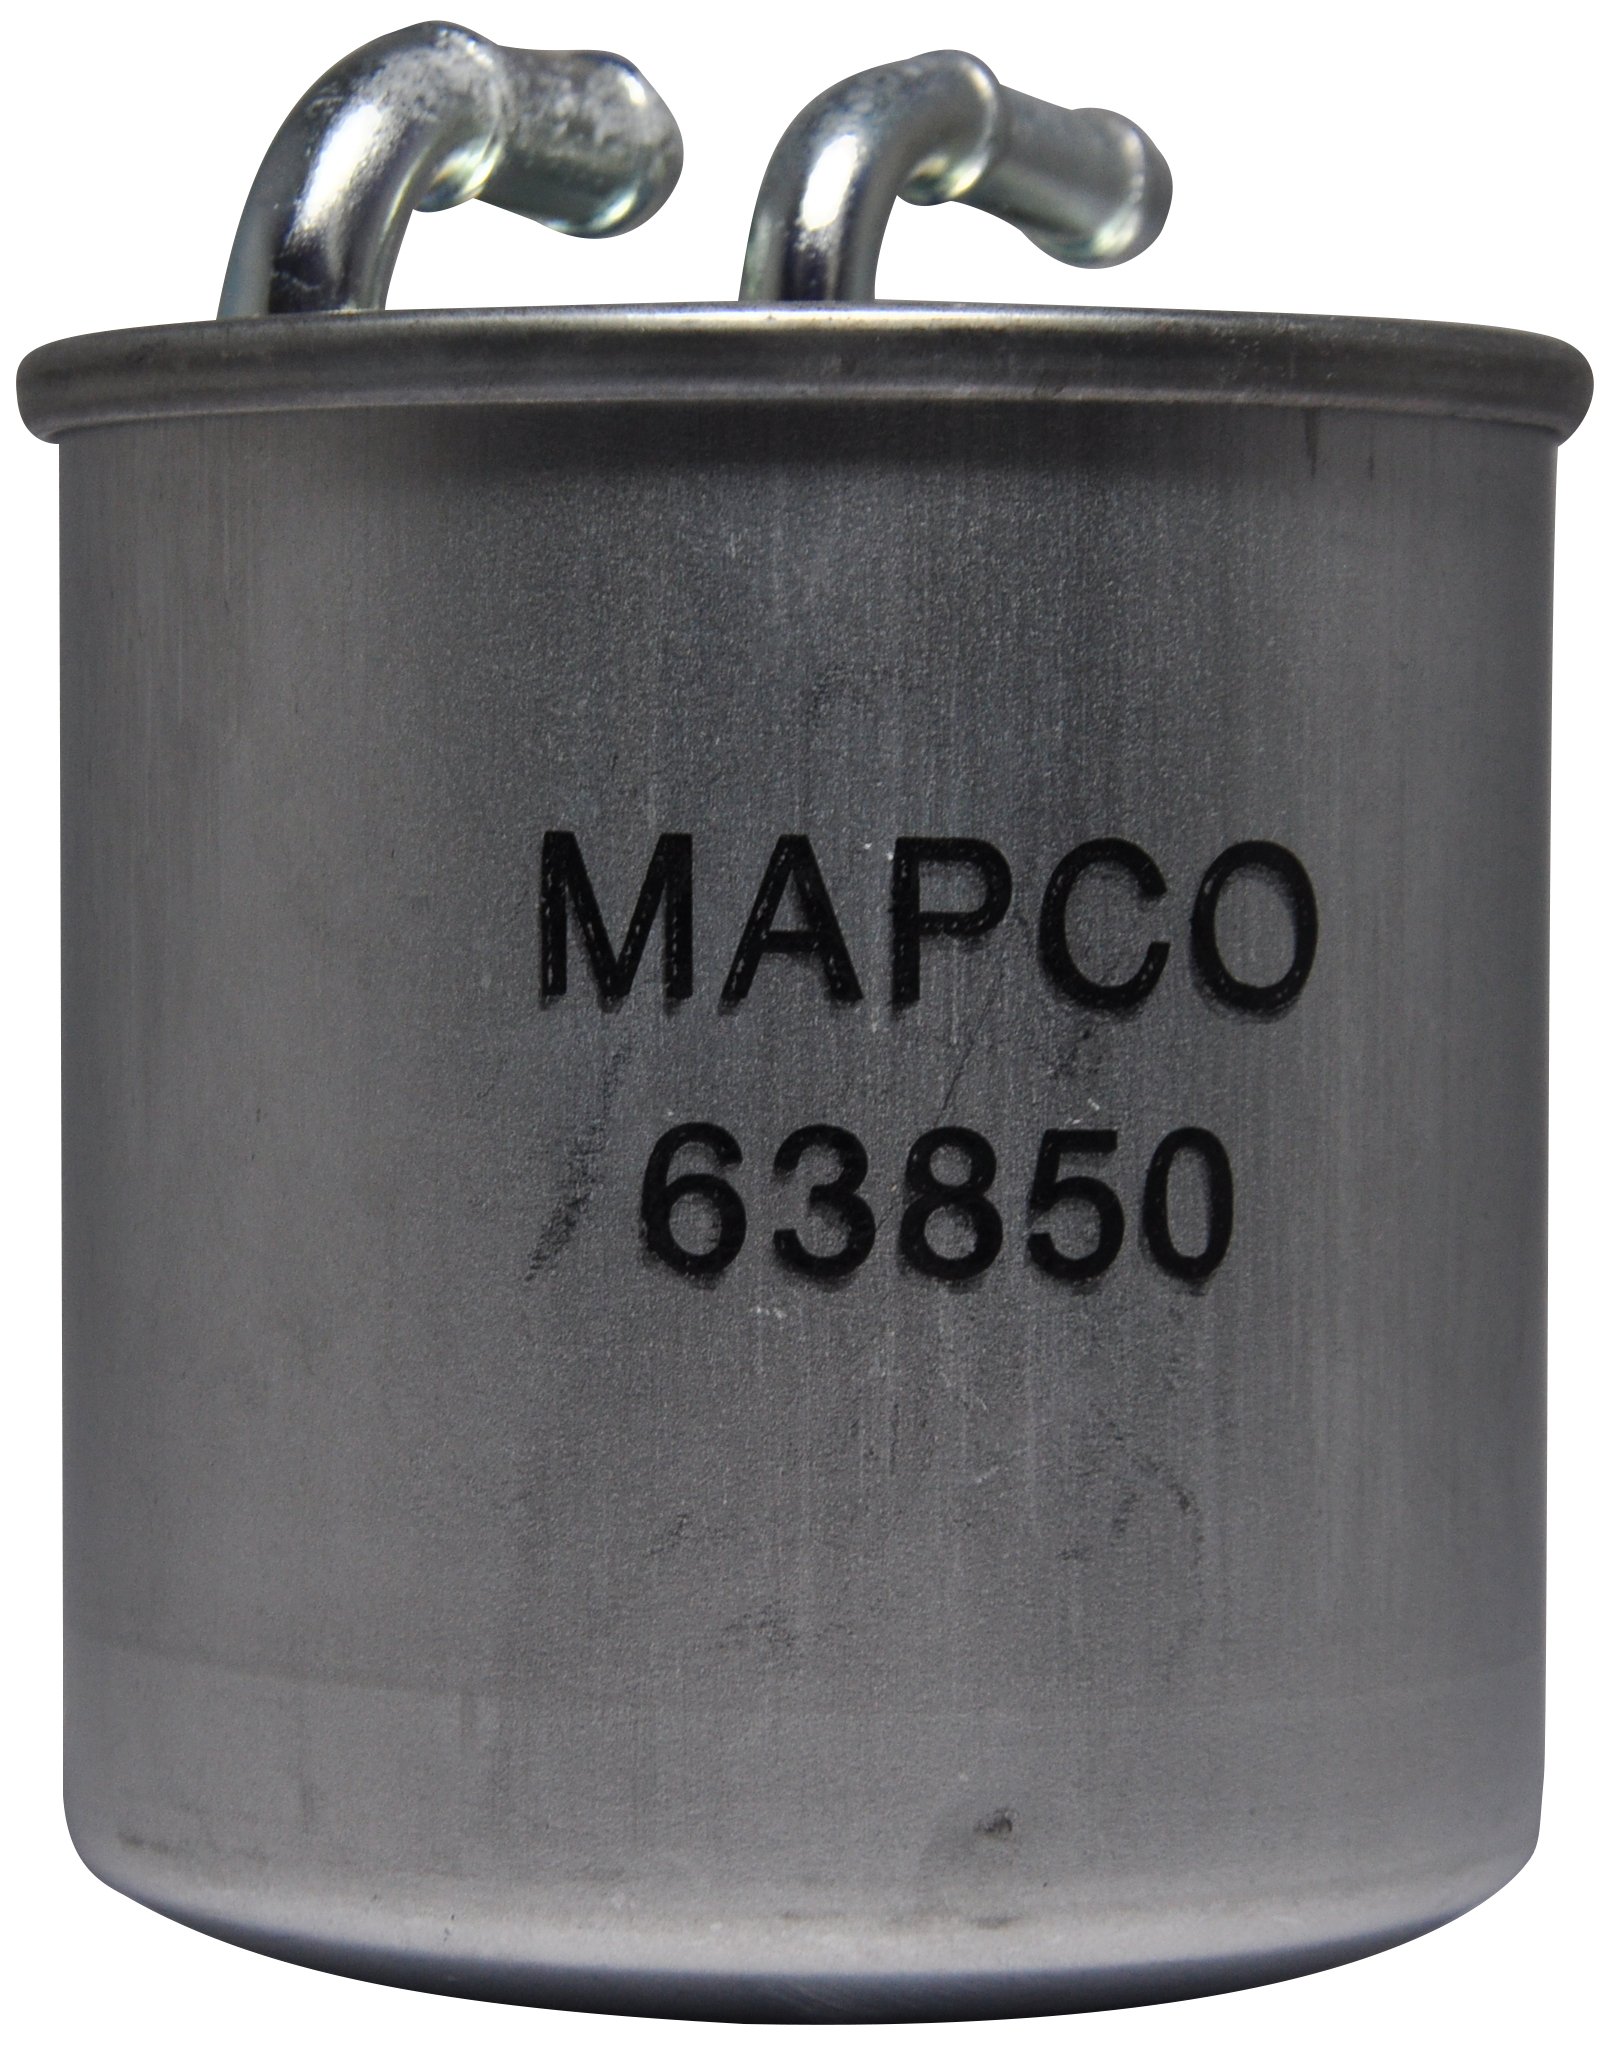 Mapco 63850 Kraftstofffilter von Mapco